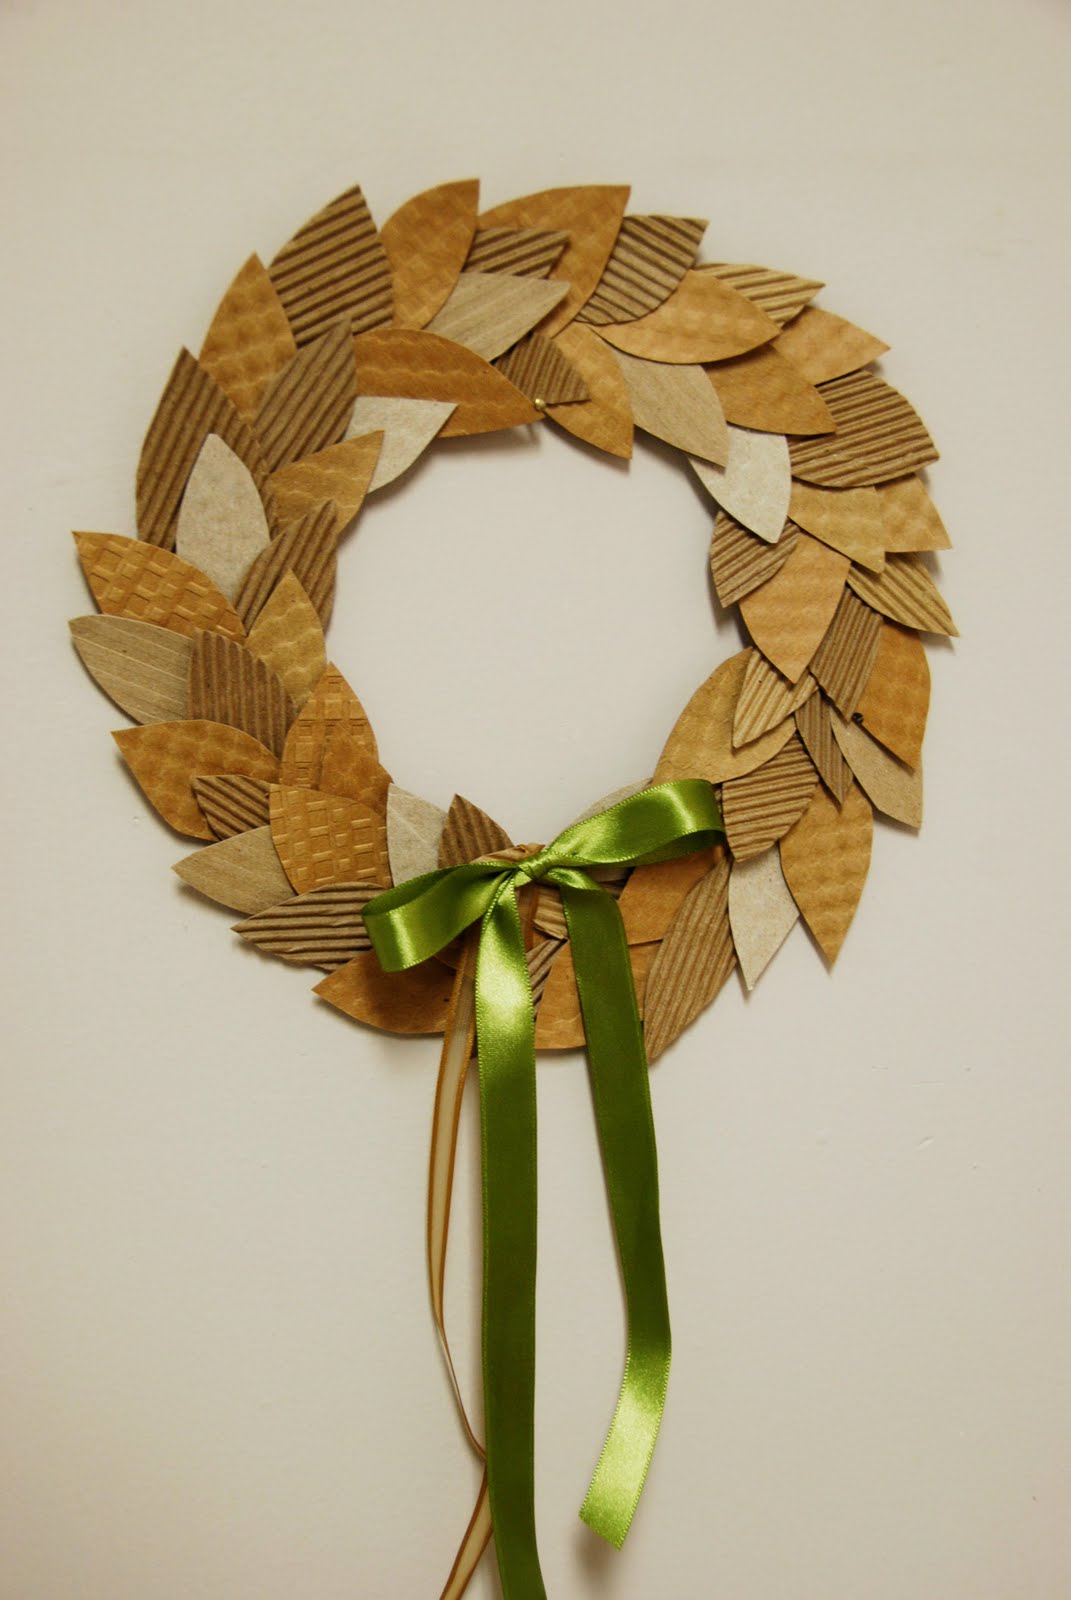 Cardboard wreath